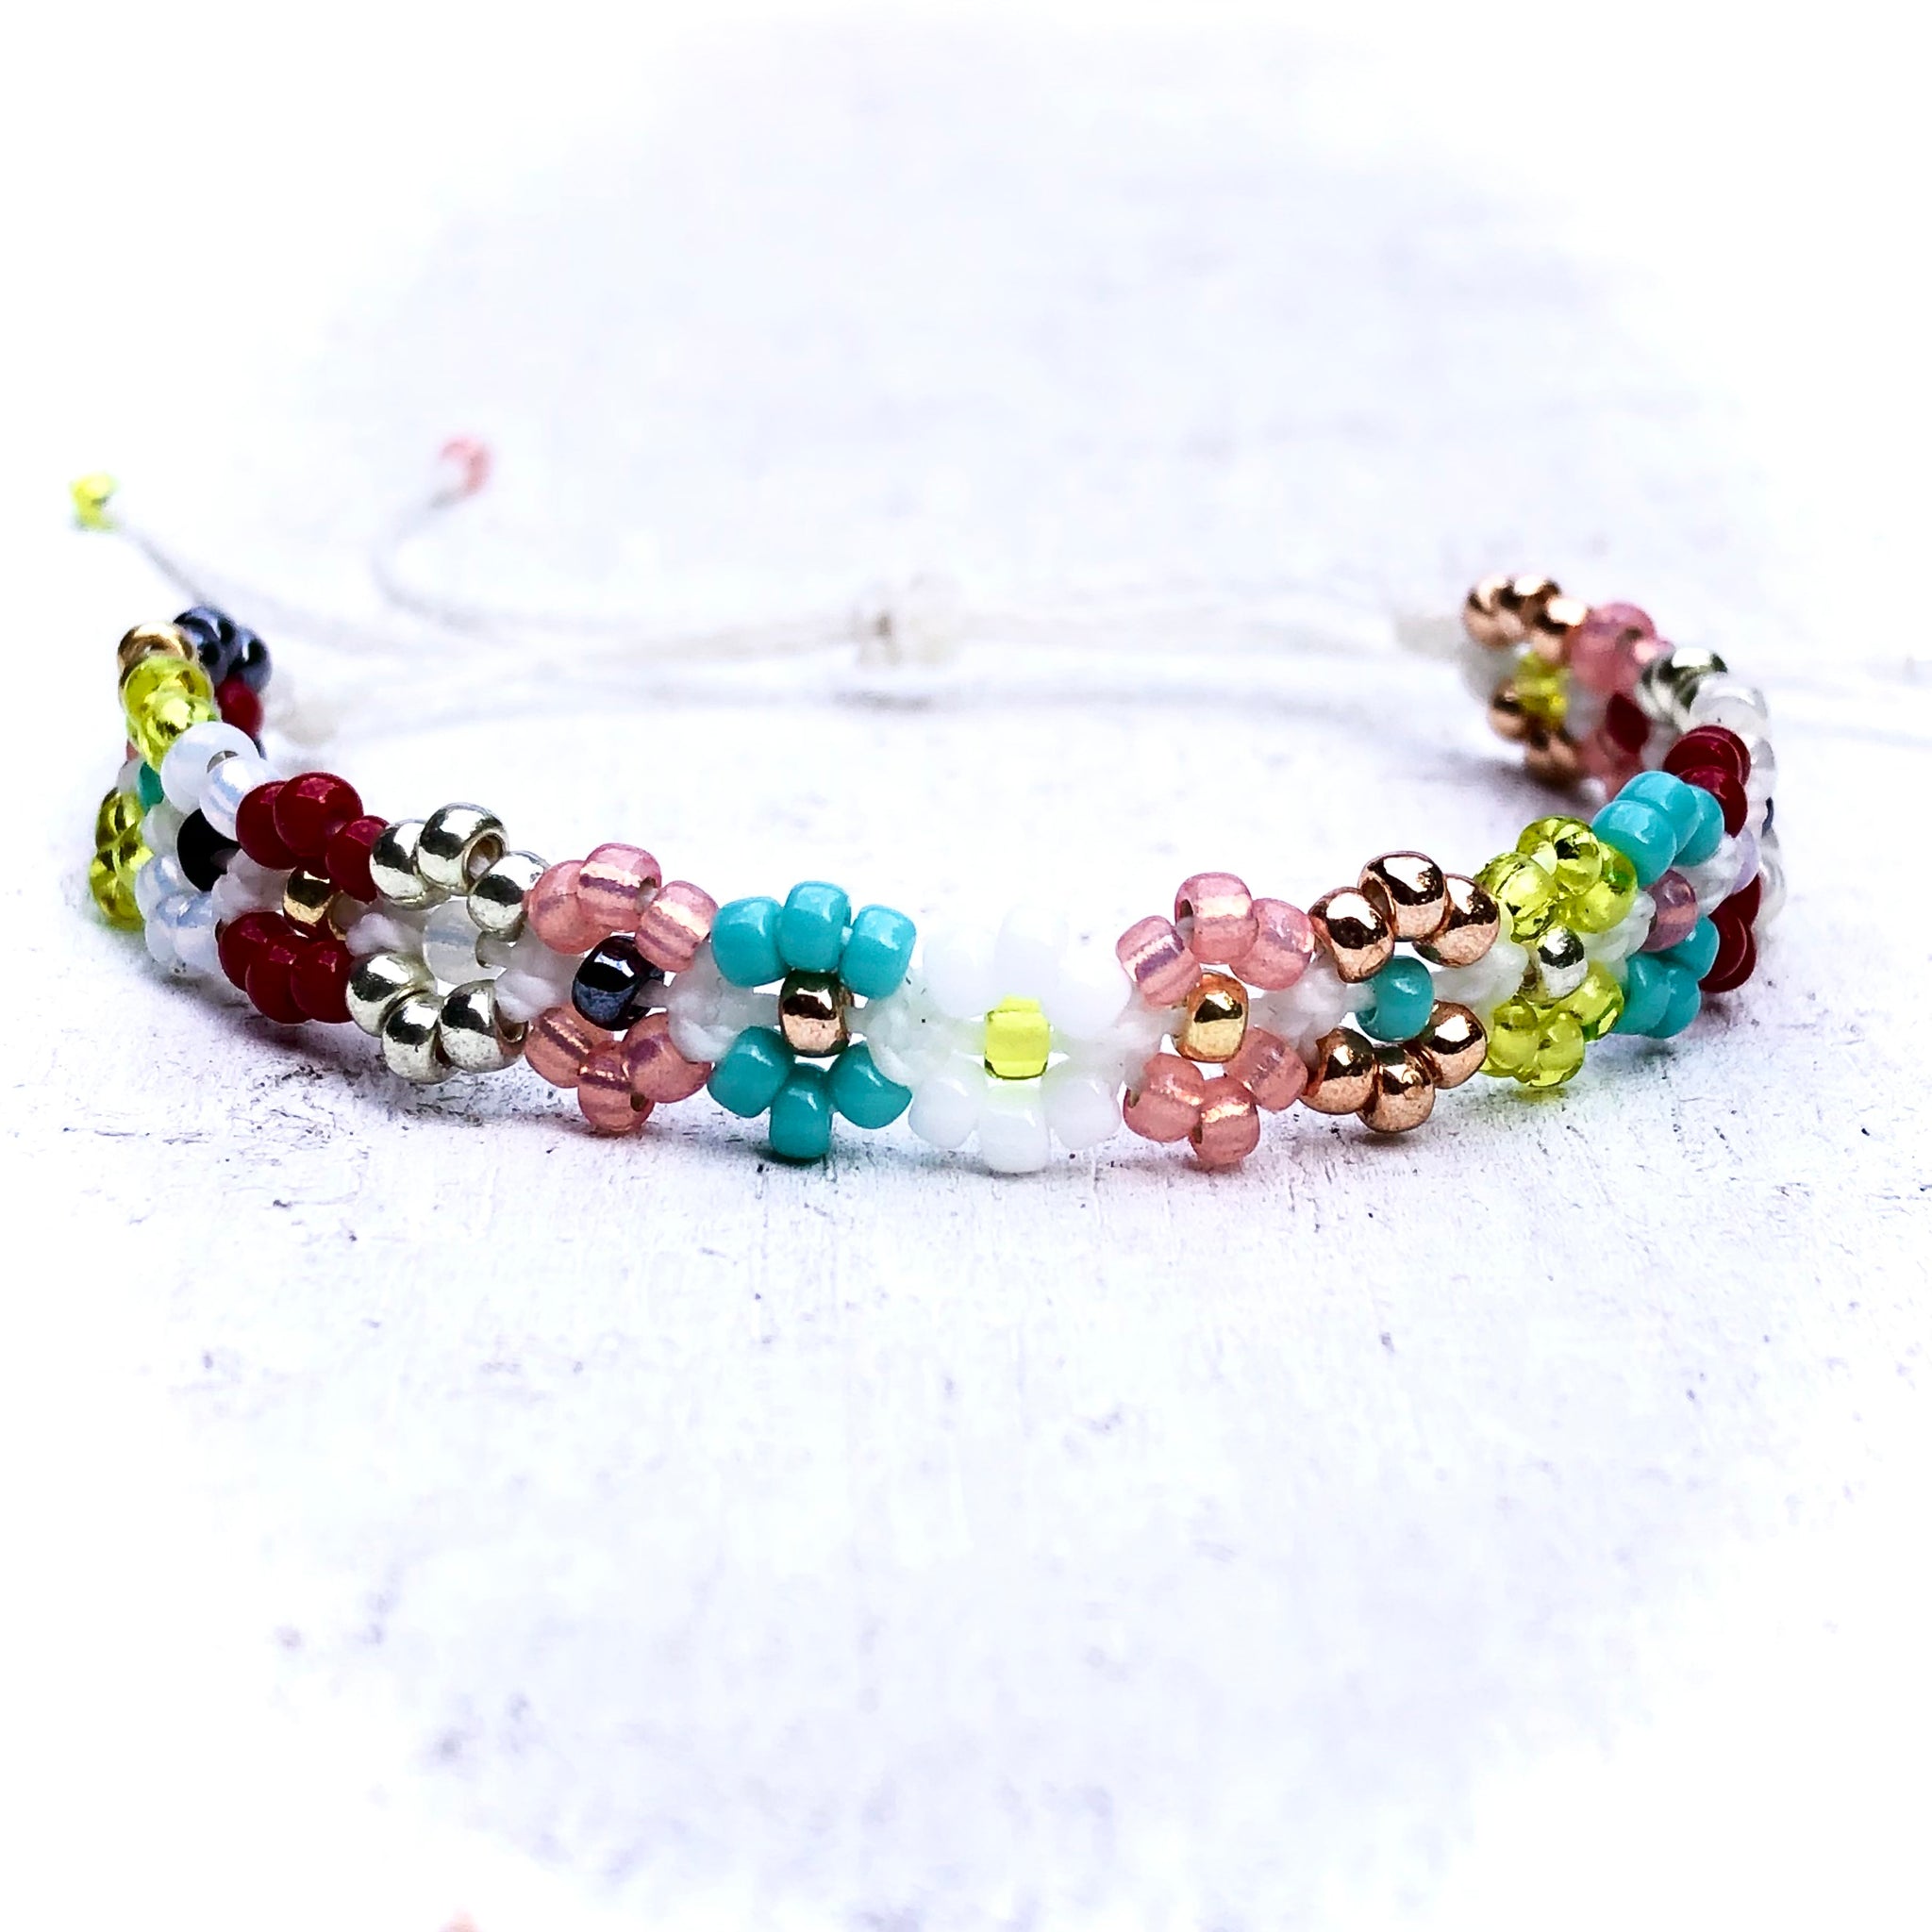 Daisy Garden Bracelet - Customize the string color!